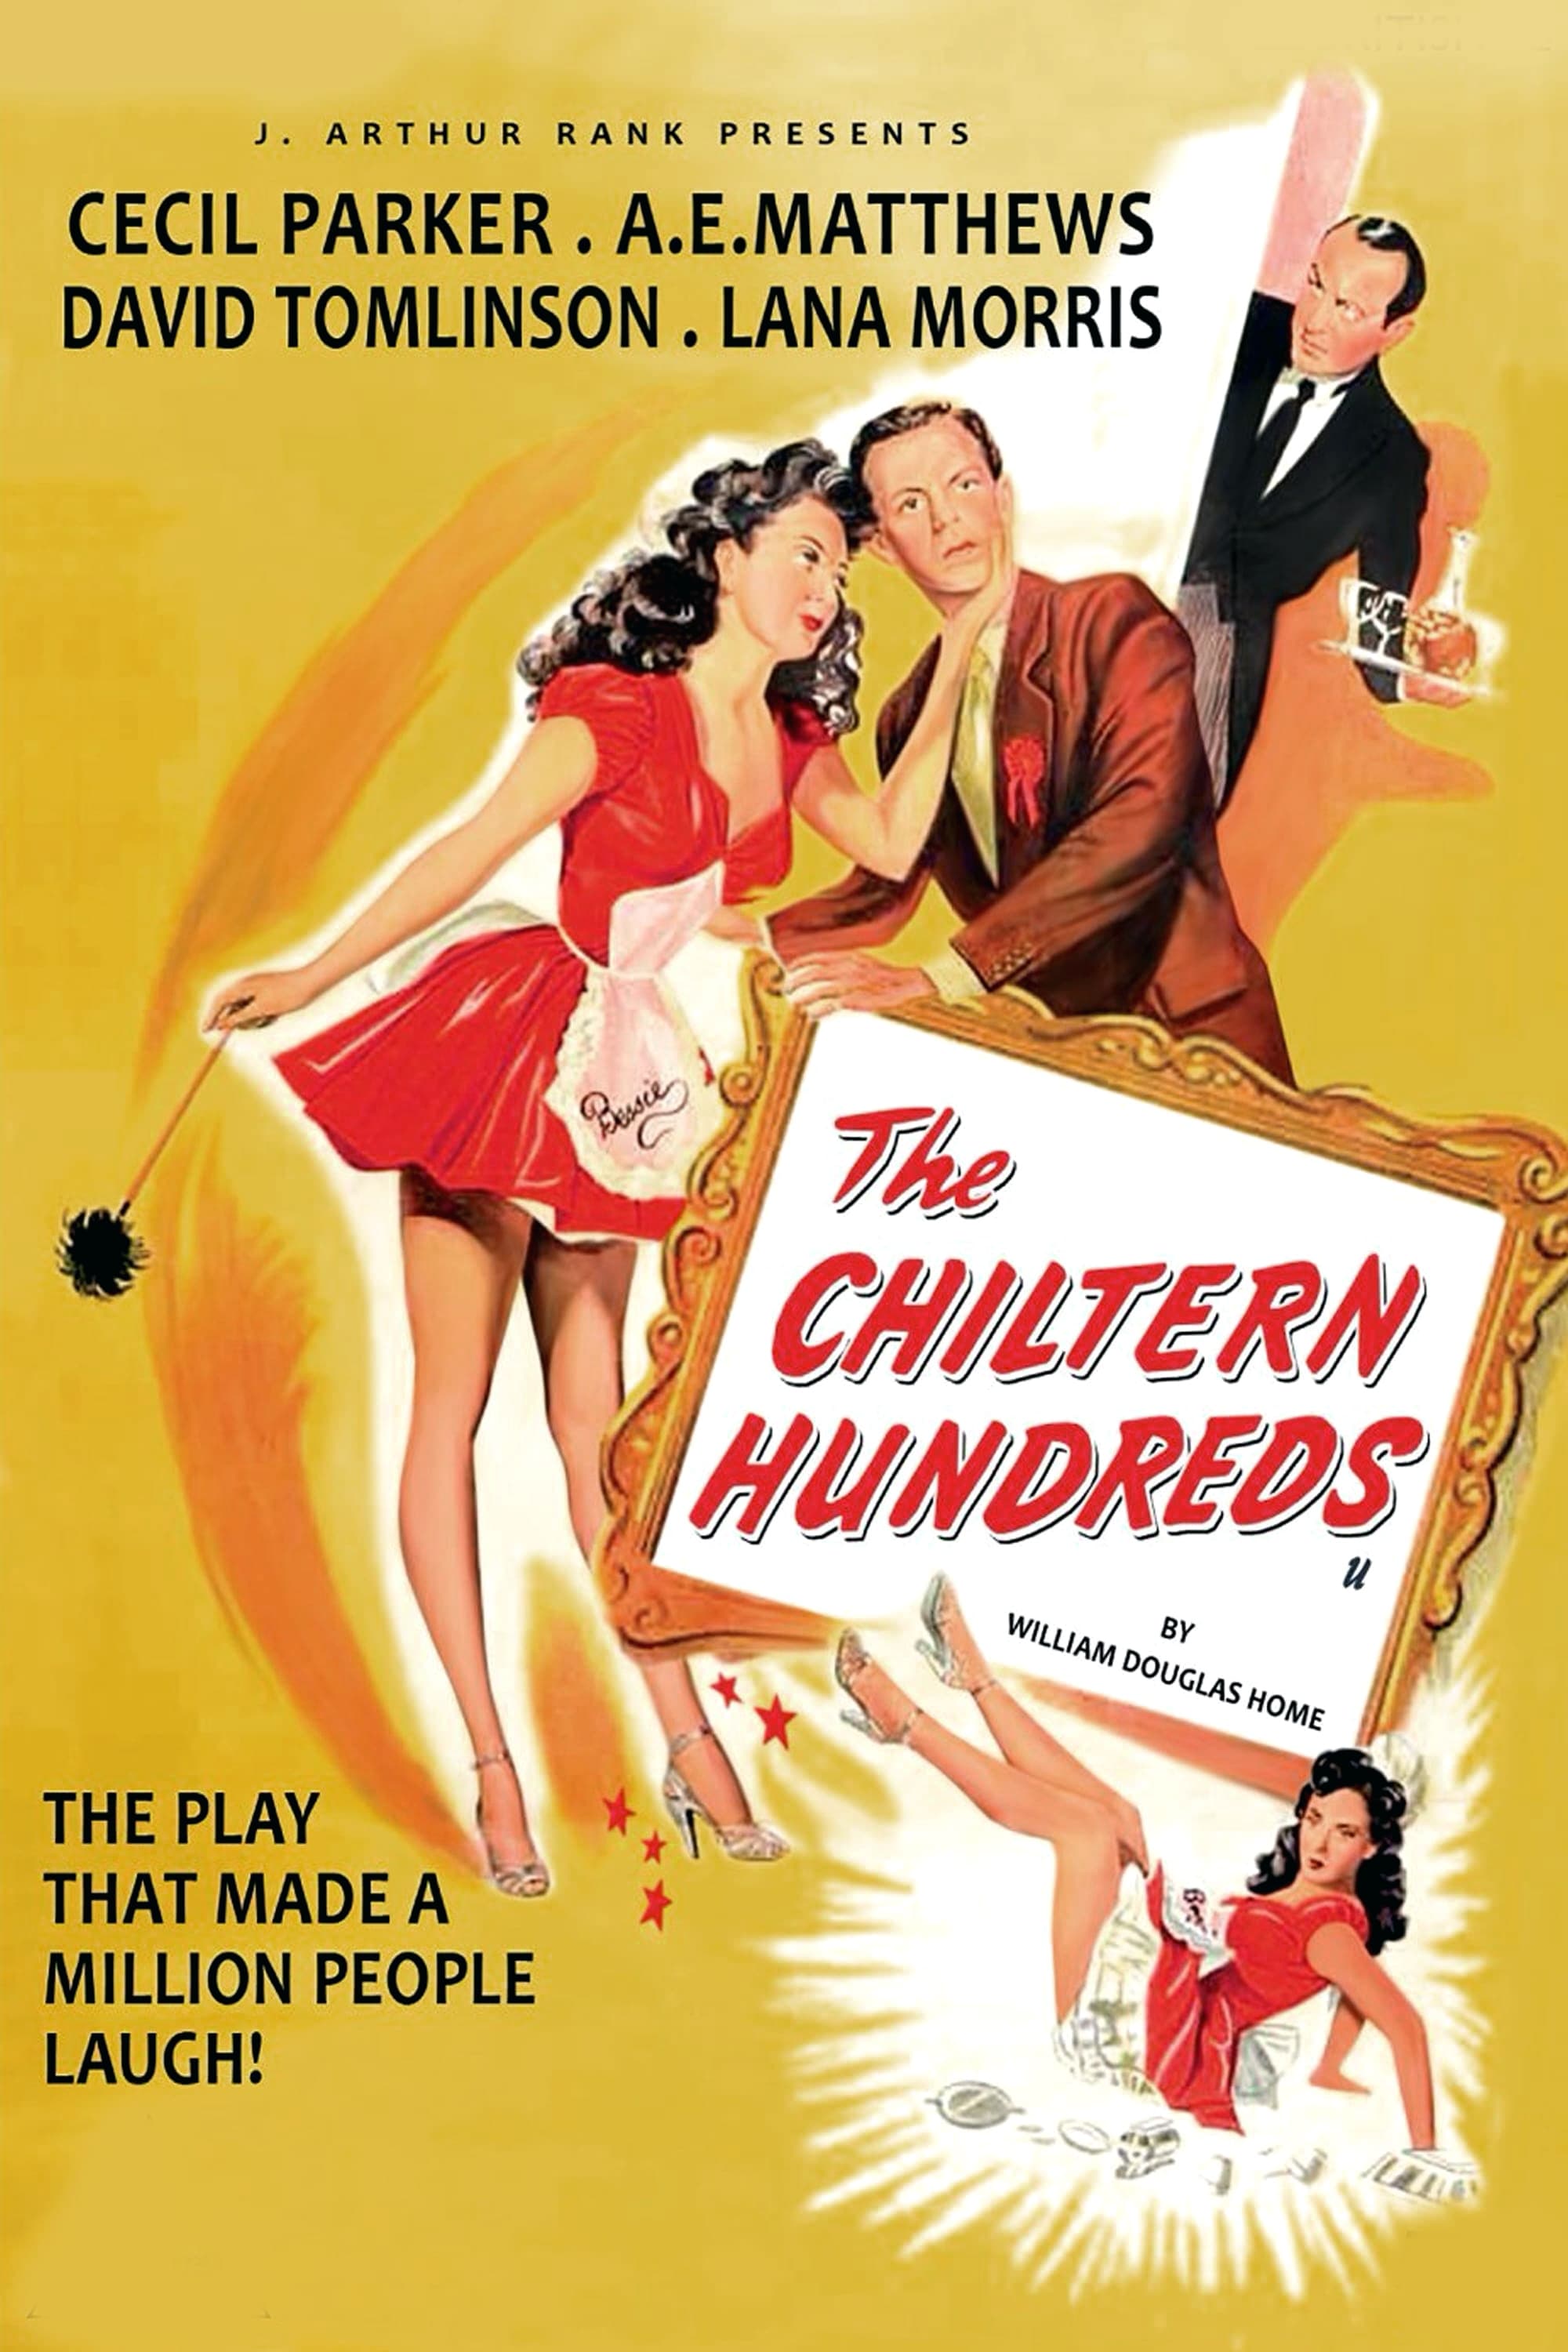 The Chiltern Hundreds (1949)